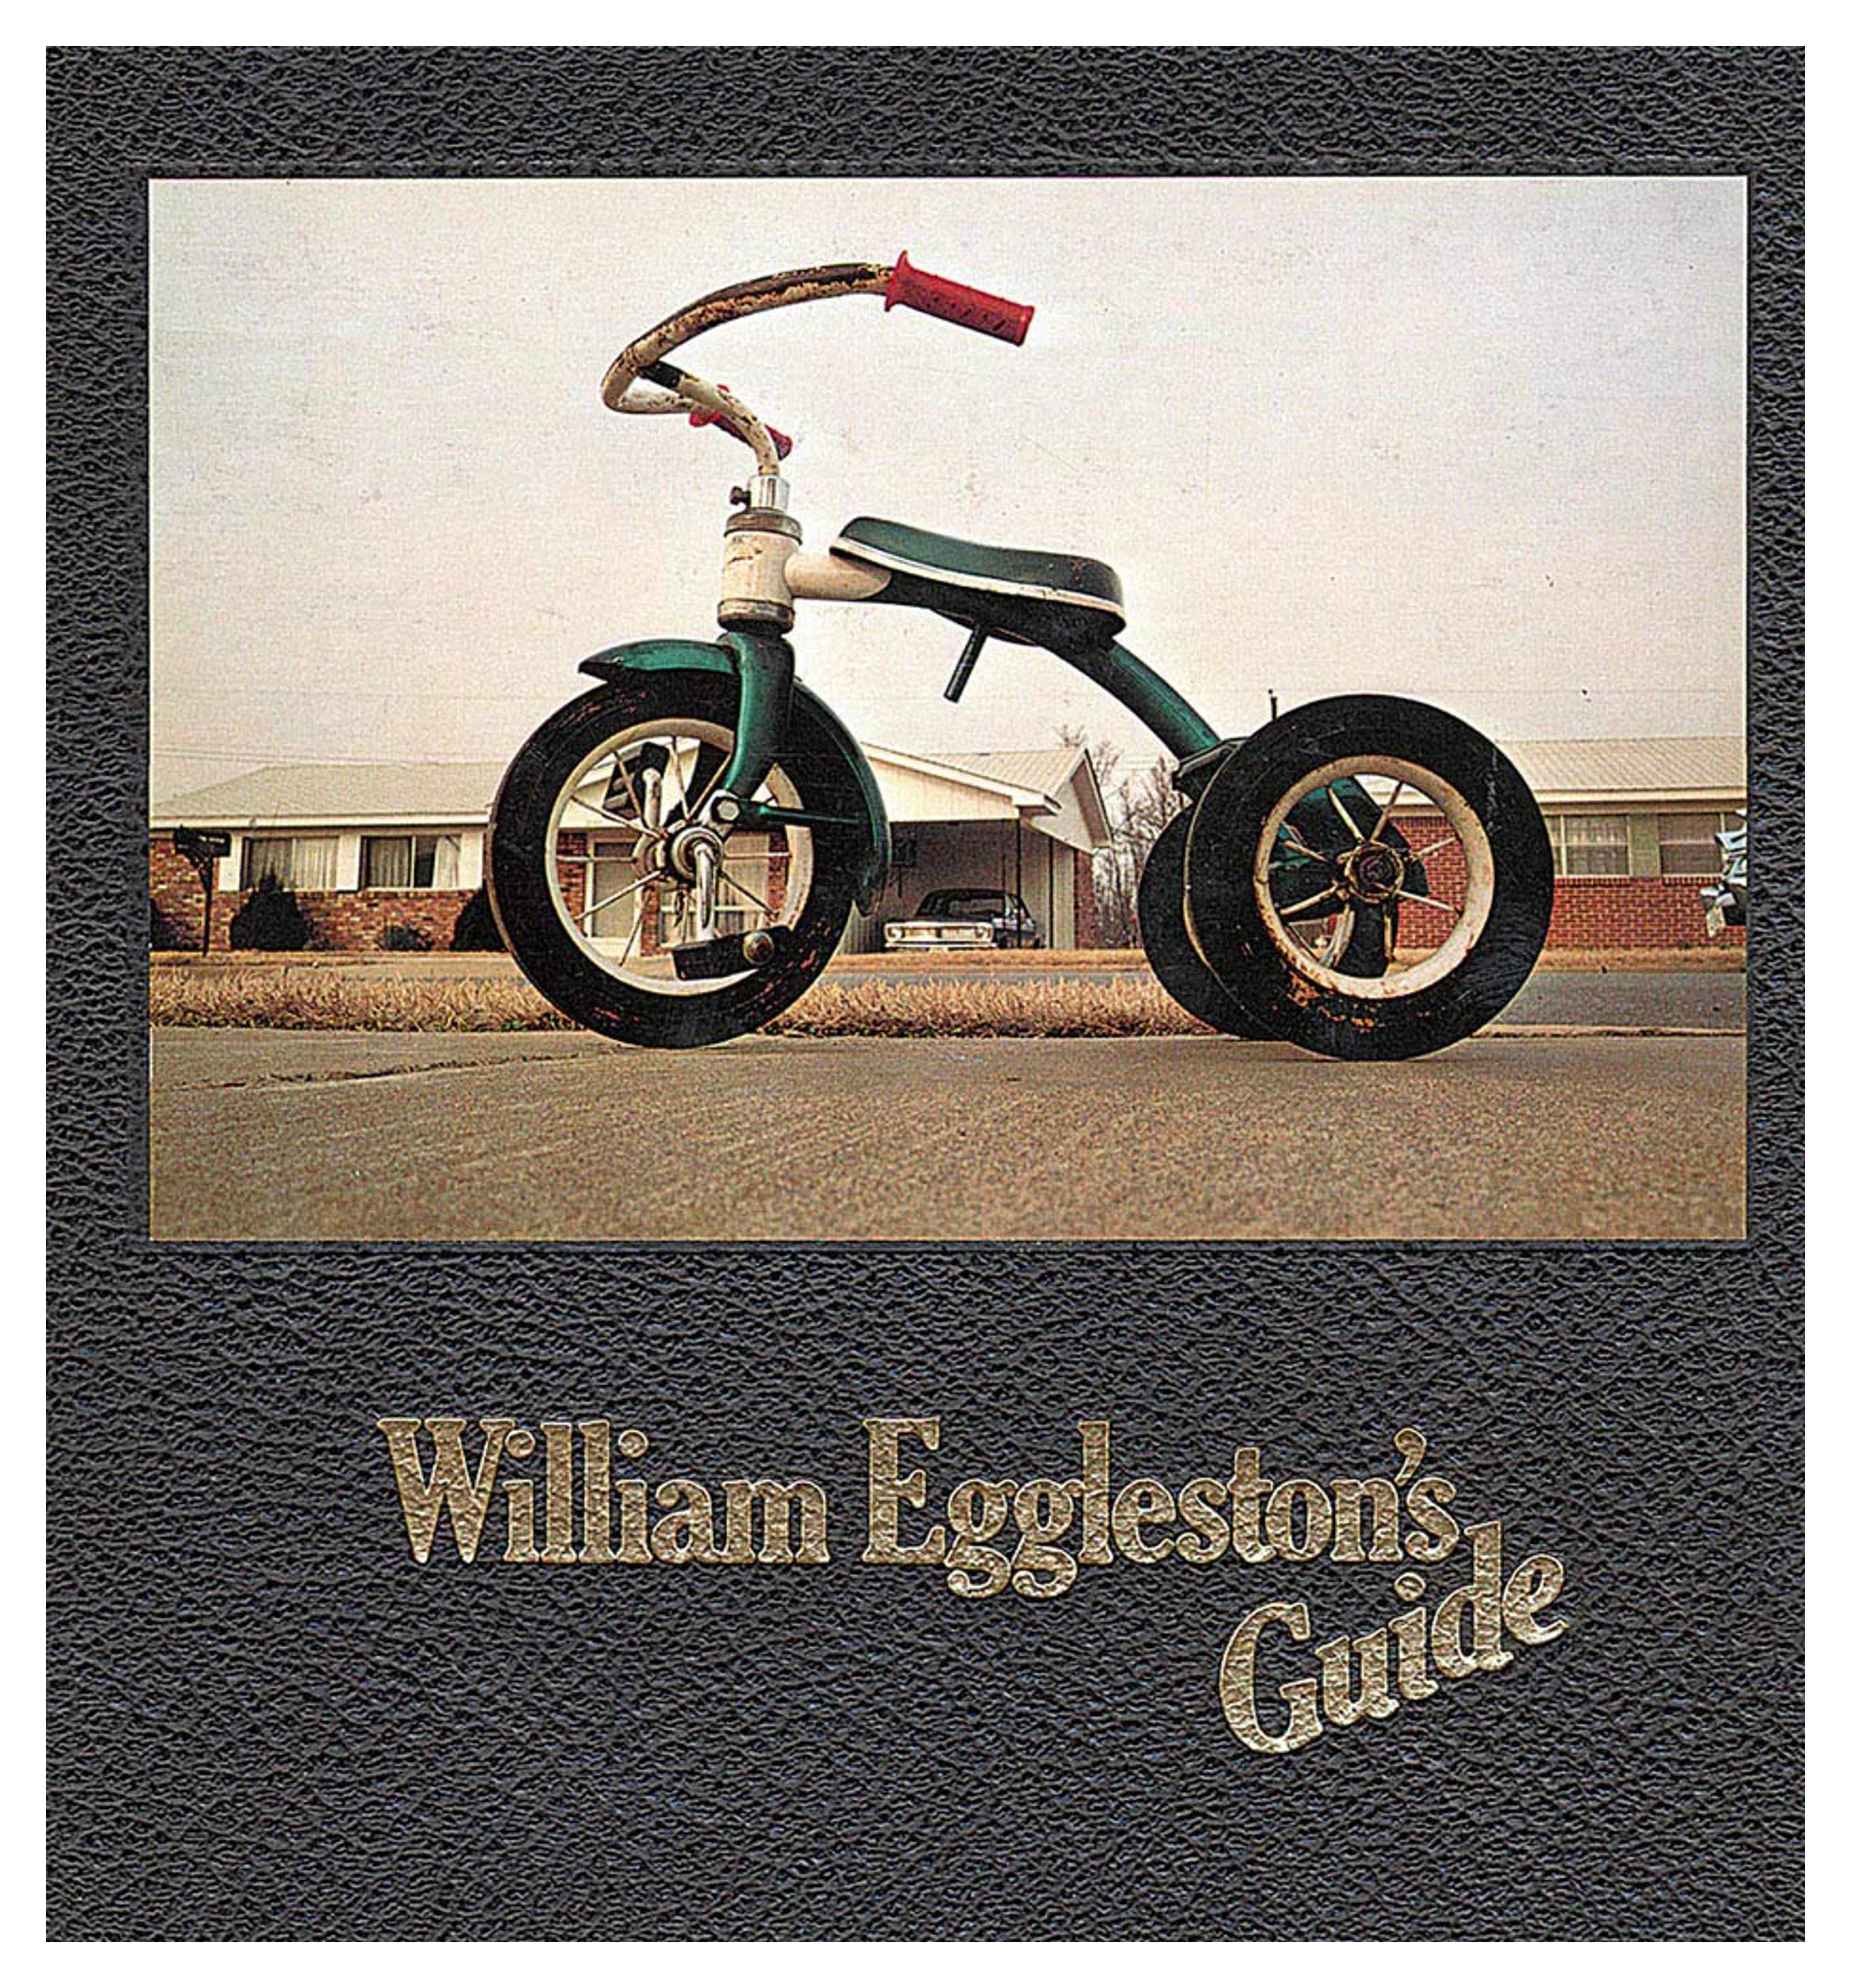 William Eggleston's Guide [Hardcover]